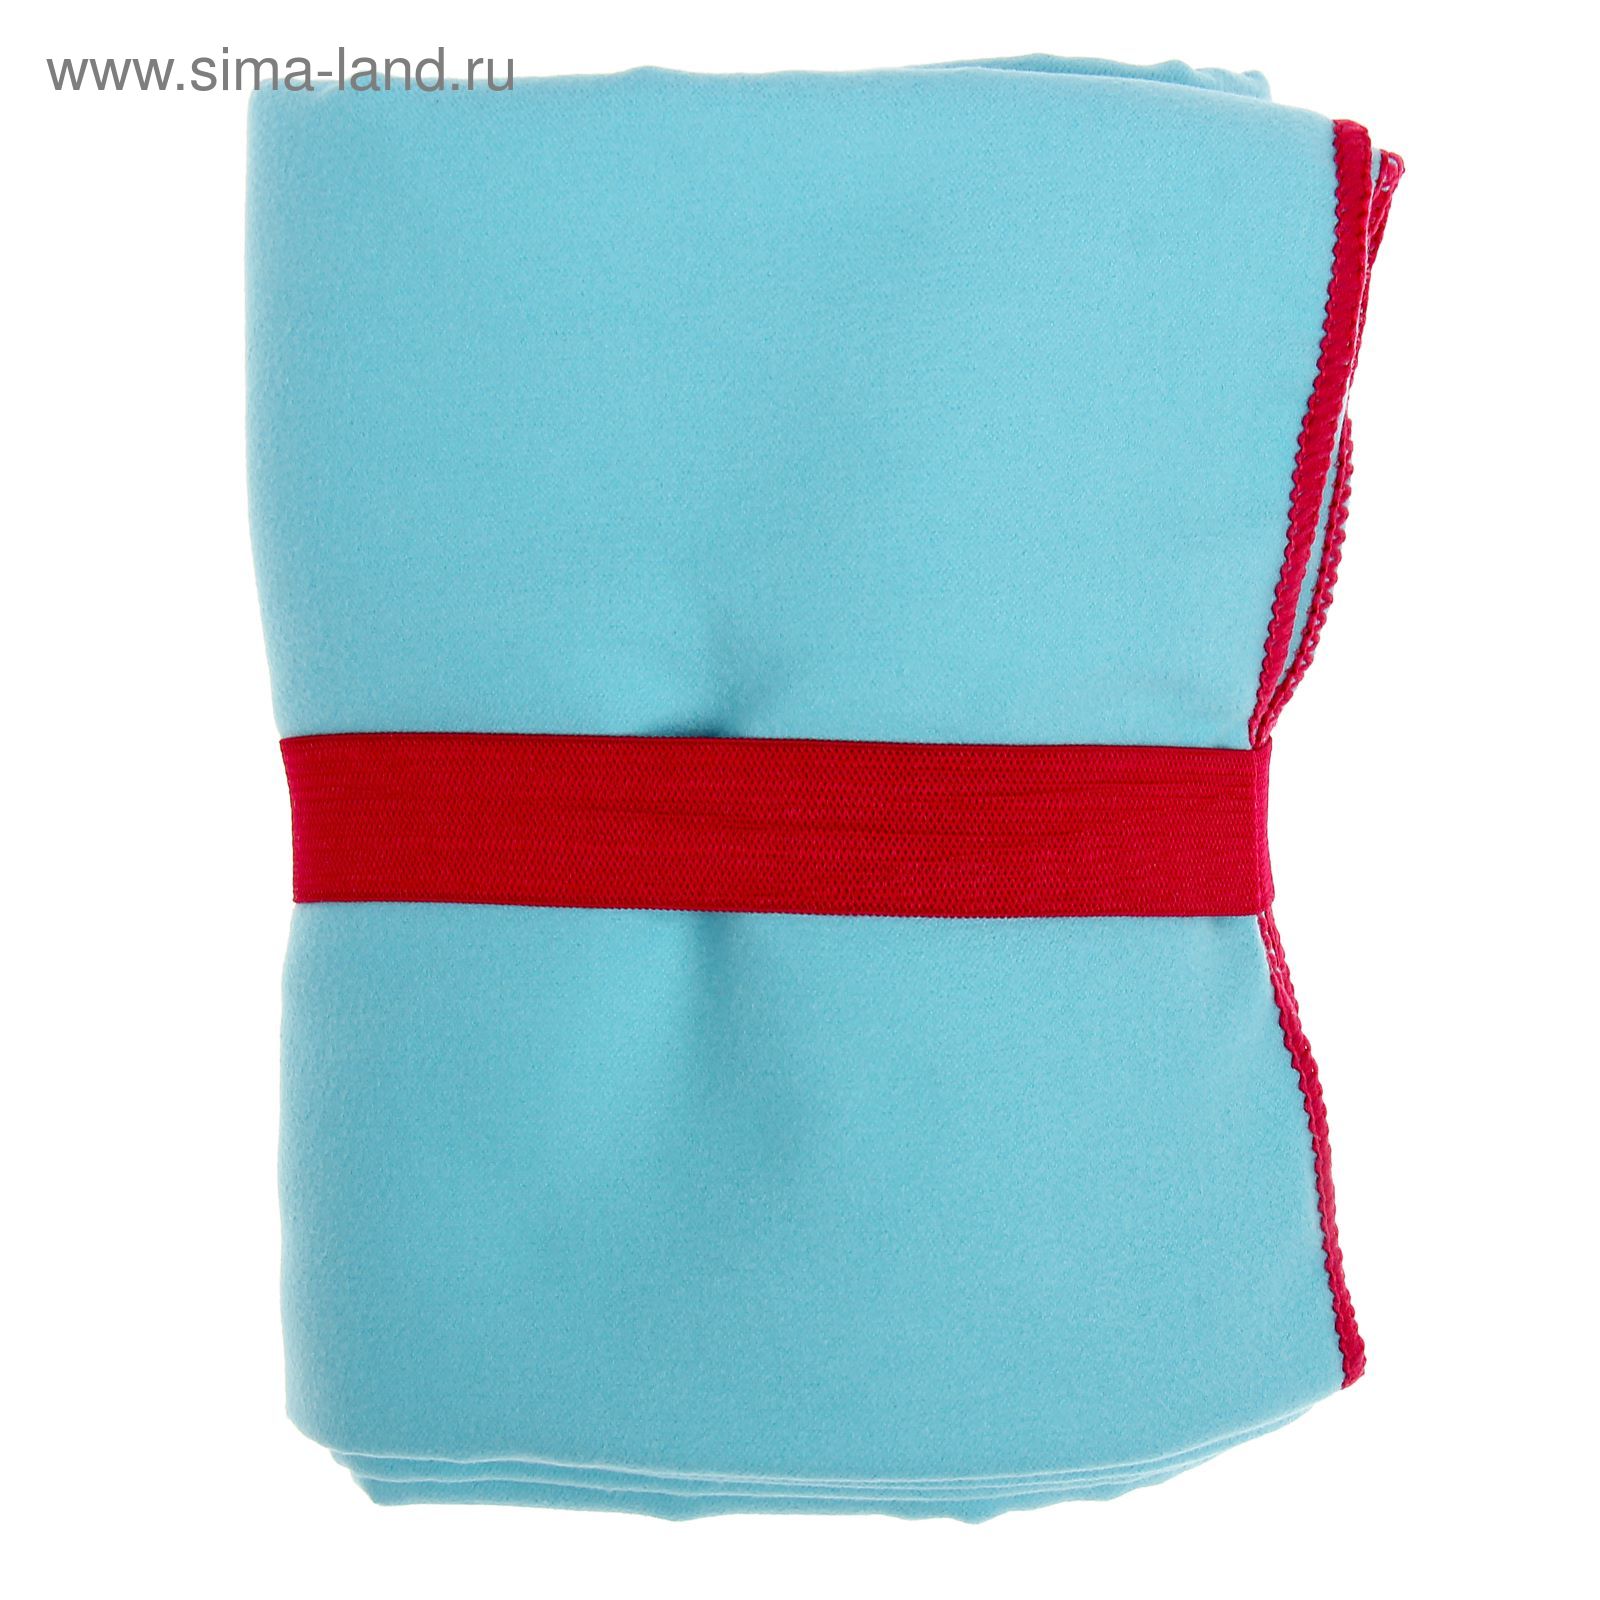 Спортивное полотенце ONLITOP, размер 40х55 см, голубой, 200 г/м2